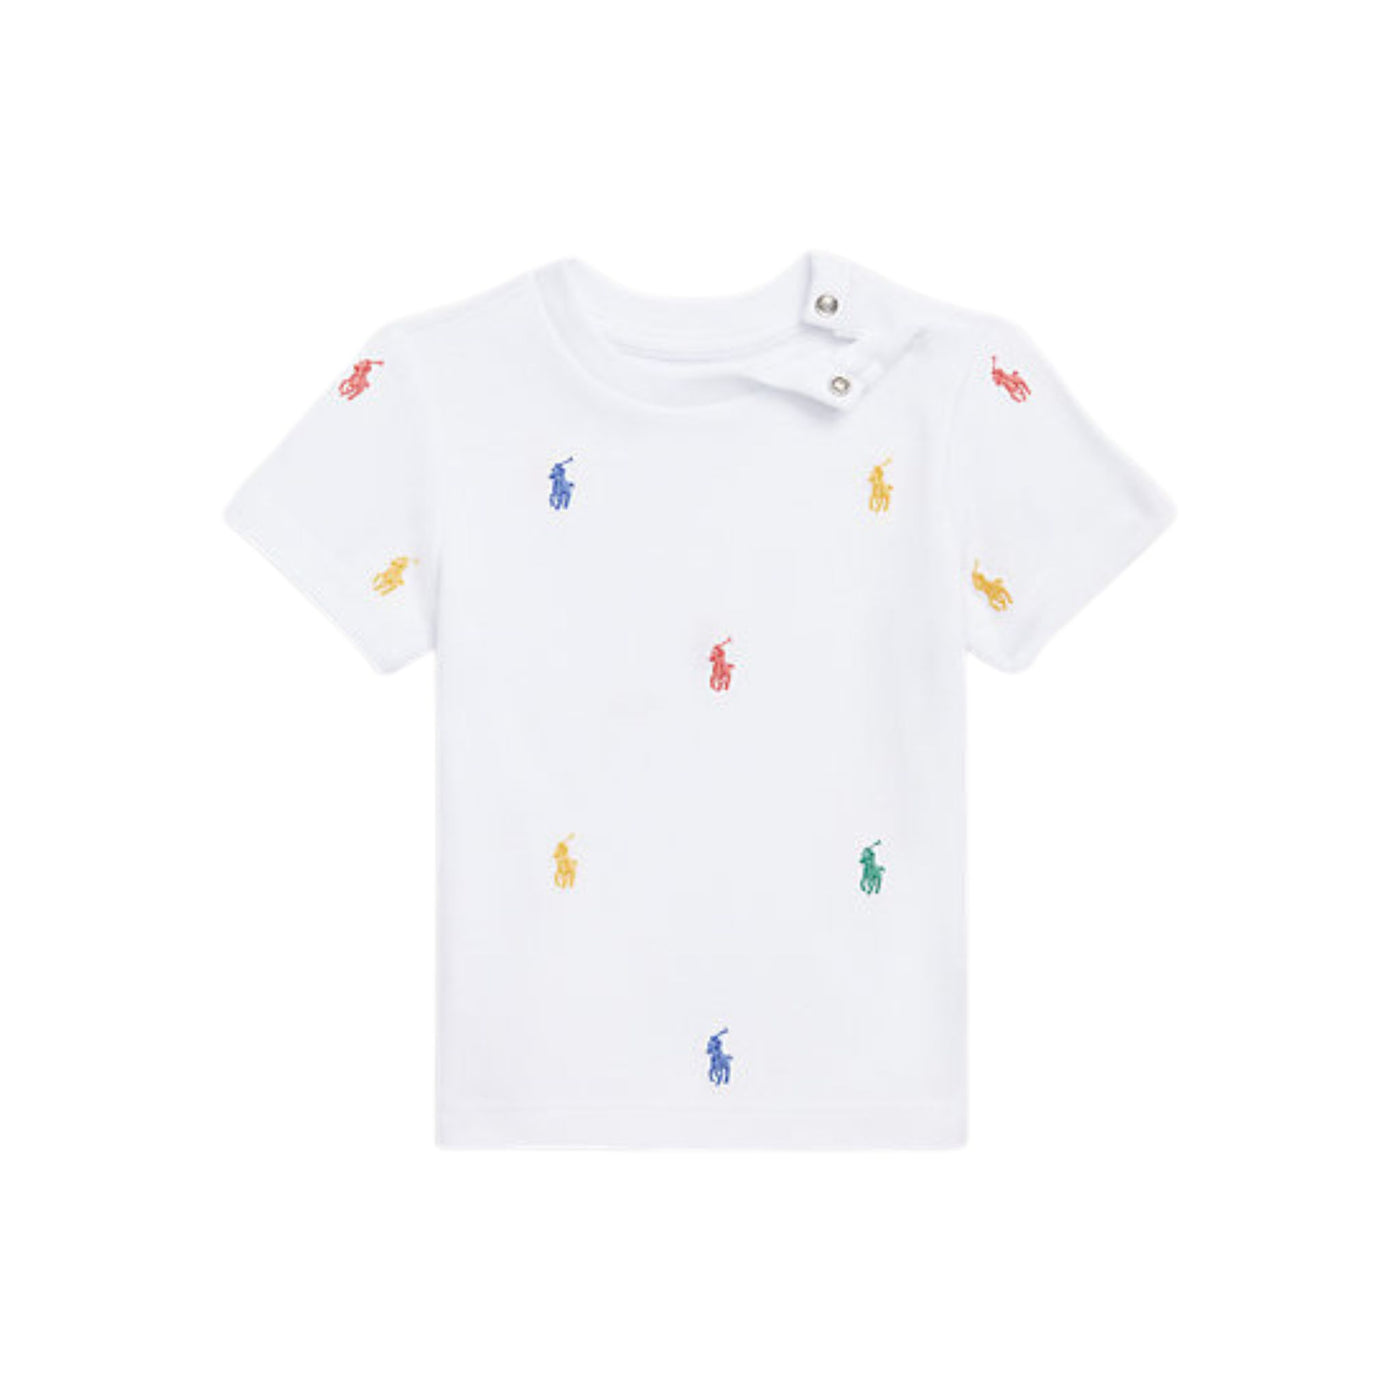 T-shirt neonato bianca firmata Polo Ralph Lauren vista frontale